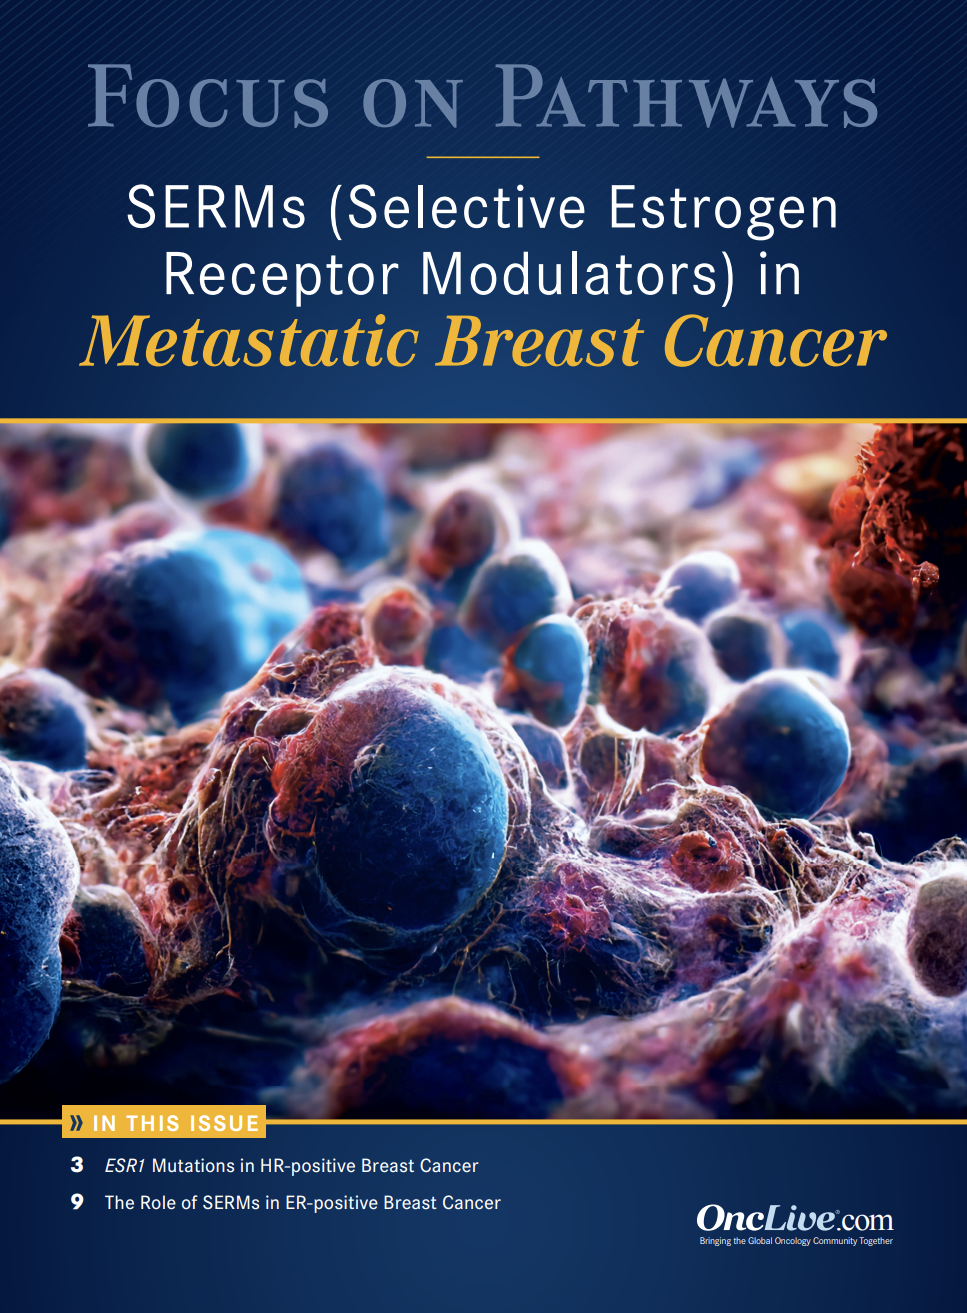 Focus on Pathways: SERMS in Metastatic Breast Cancer